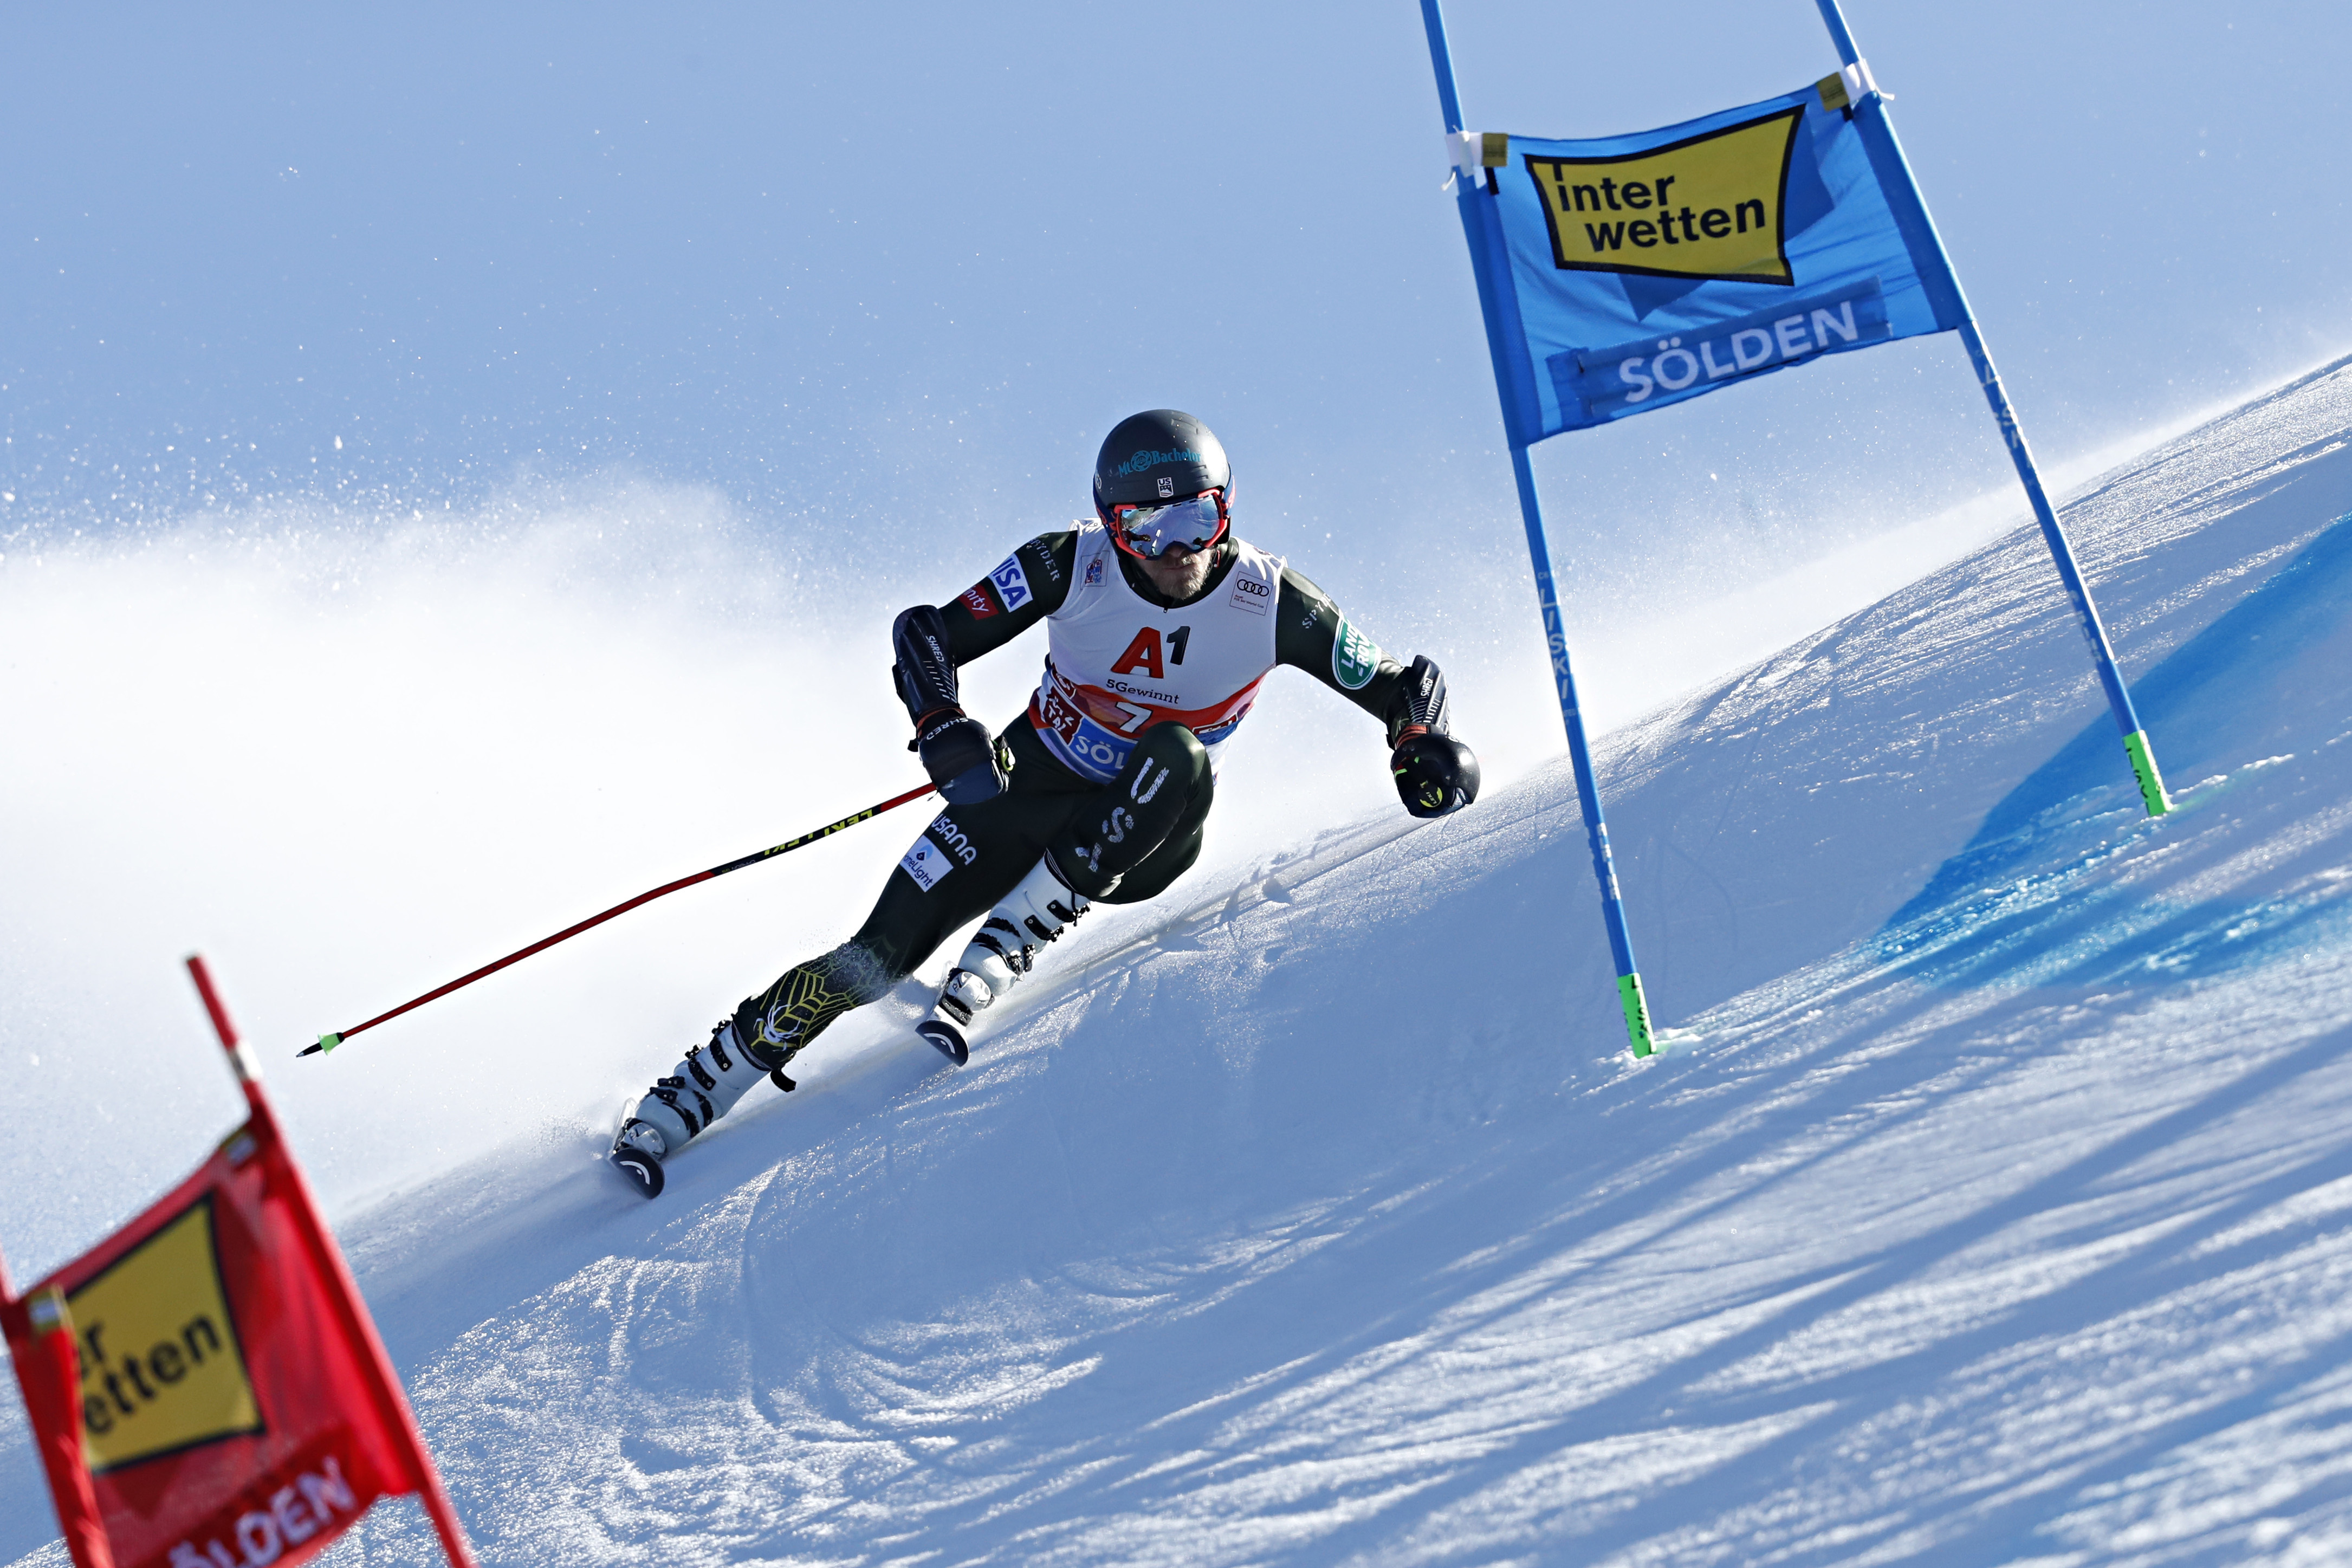 FIS Announces Earlier Start To 2020 21 Alpine World Cup Season